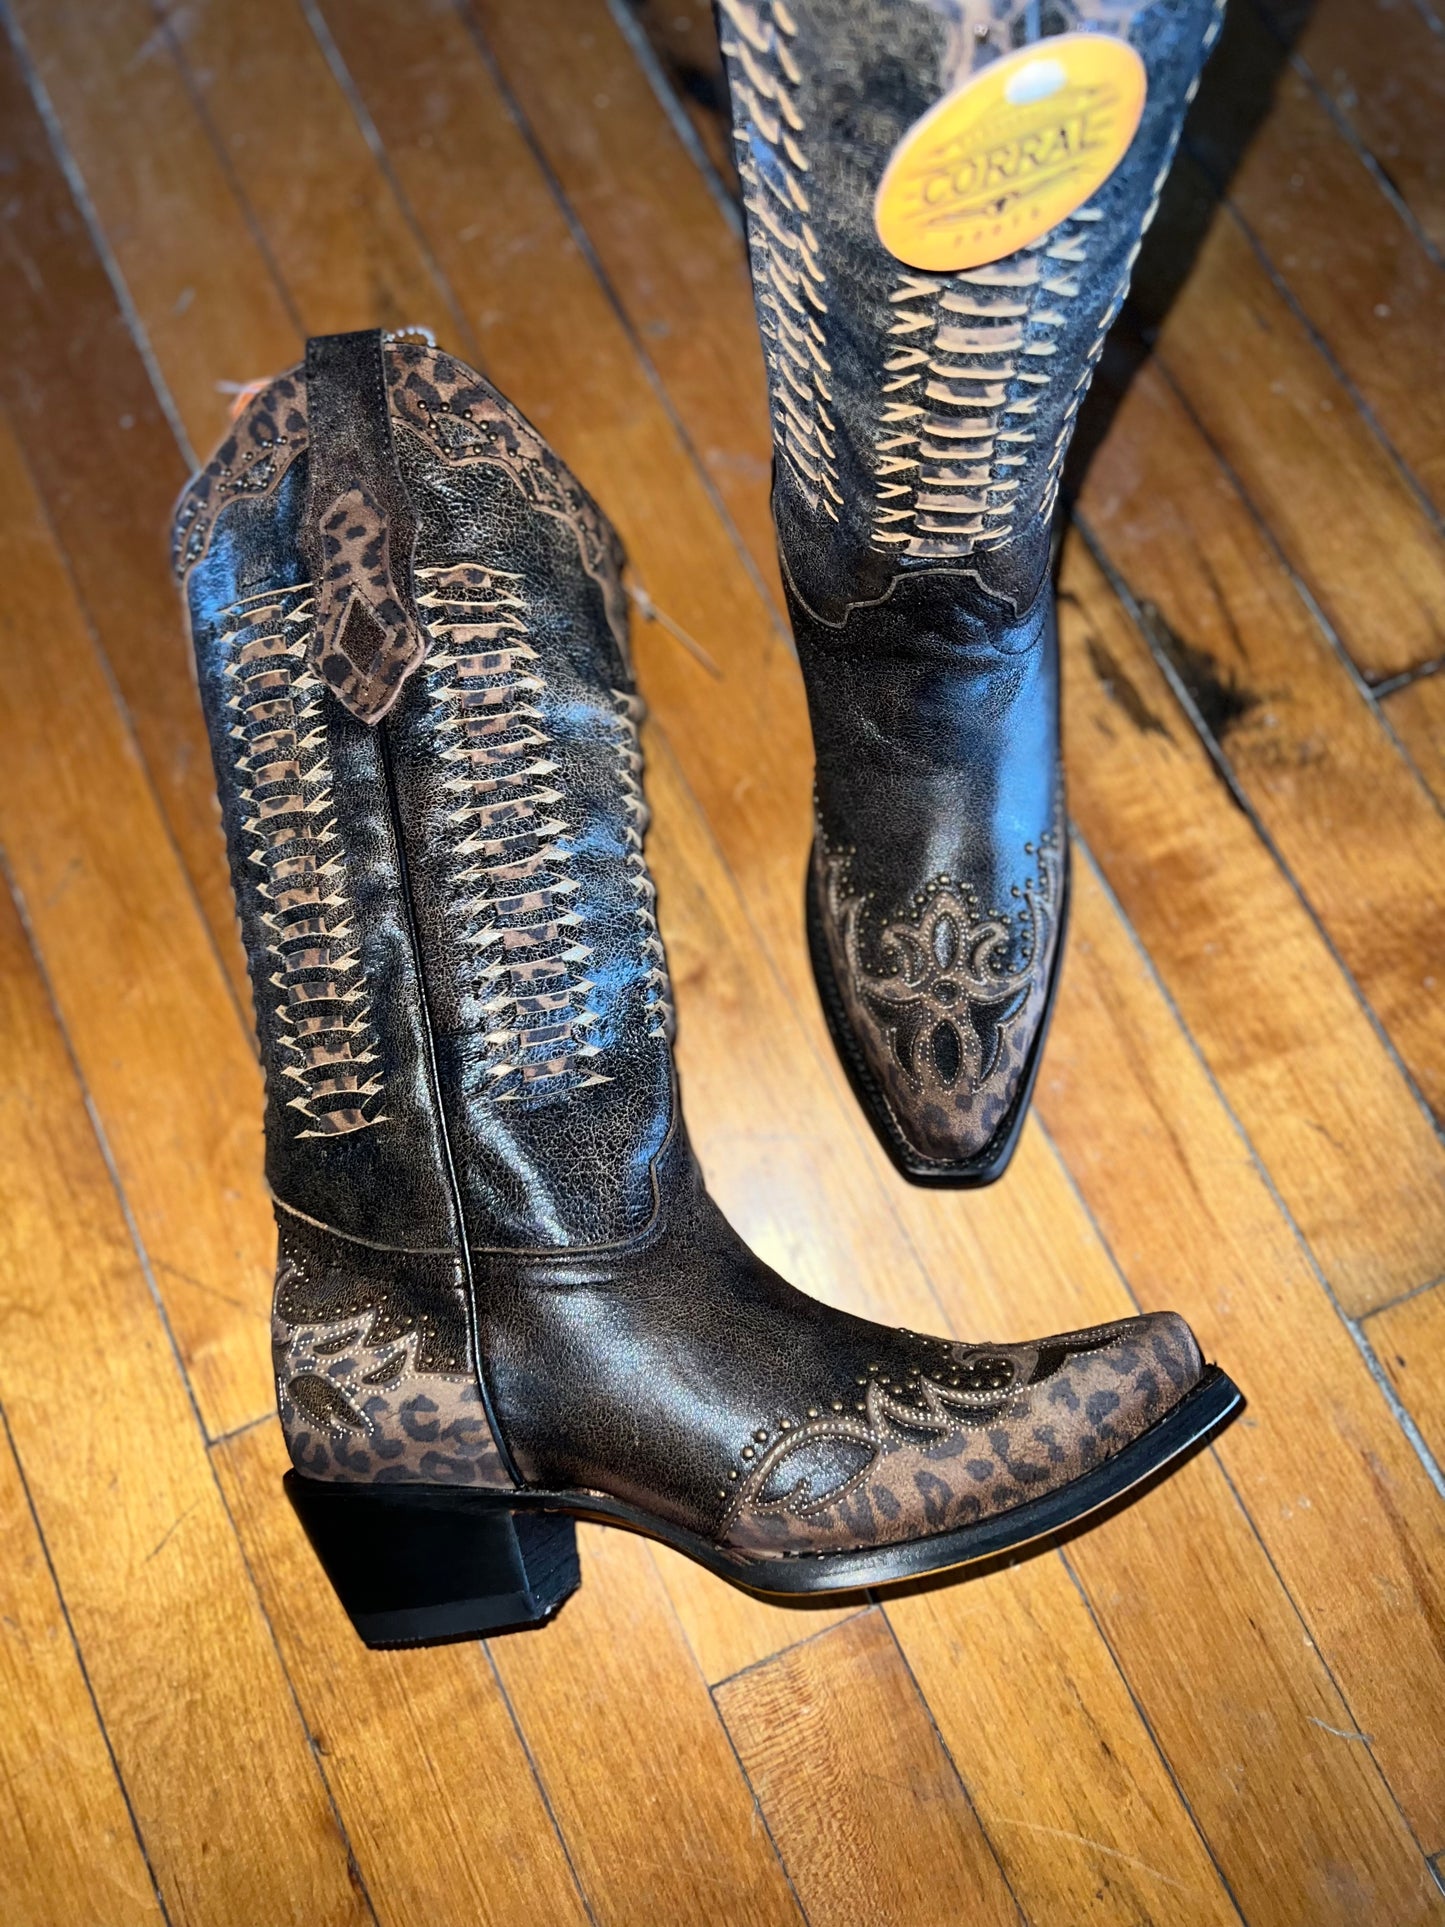 The Katlyn Corral Boots